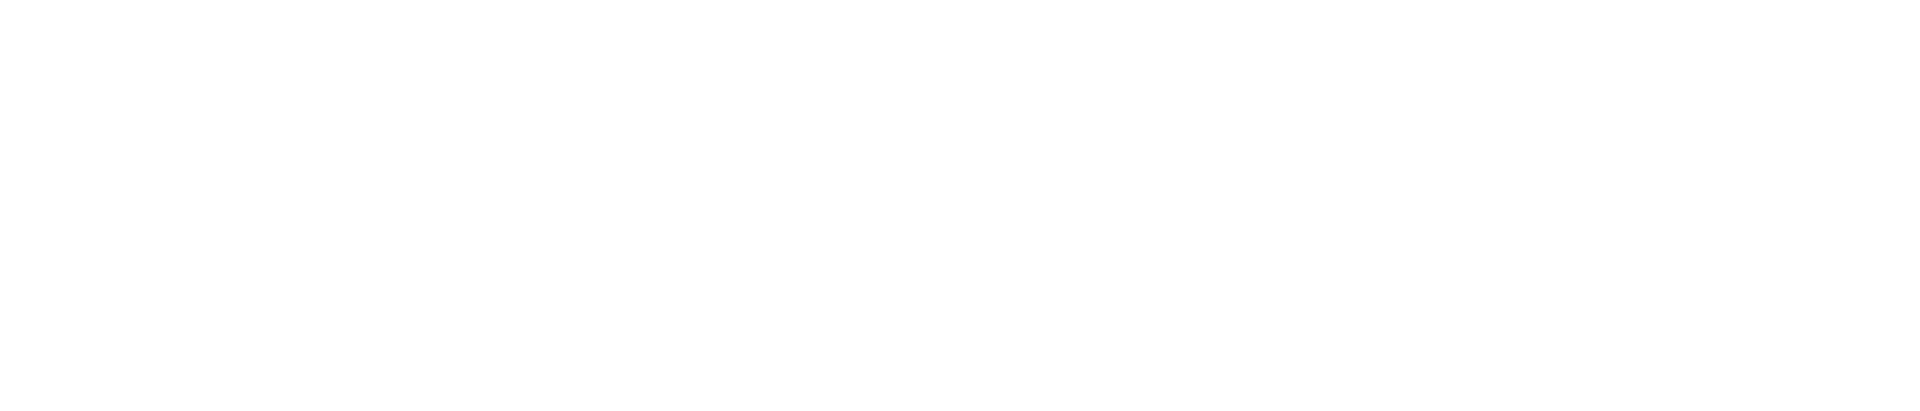 WordPress.com Logo and Wordmark